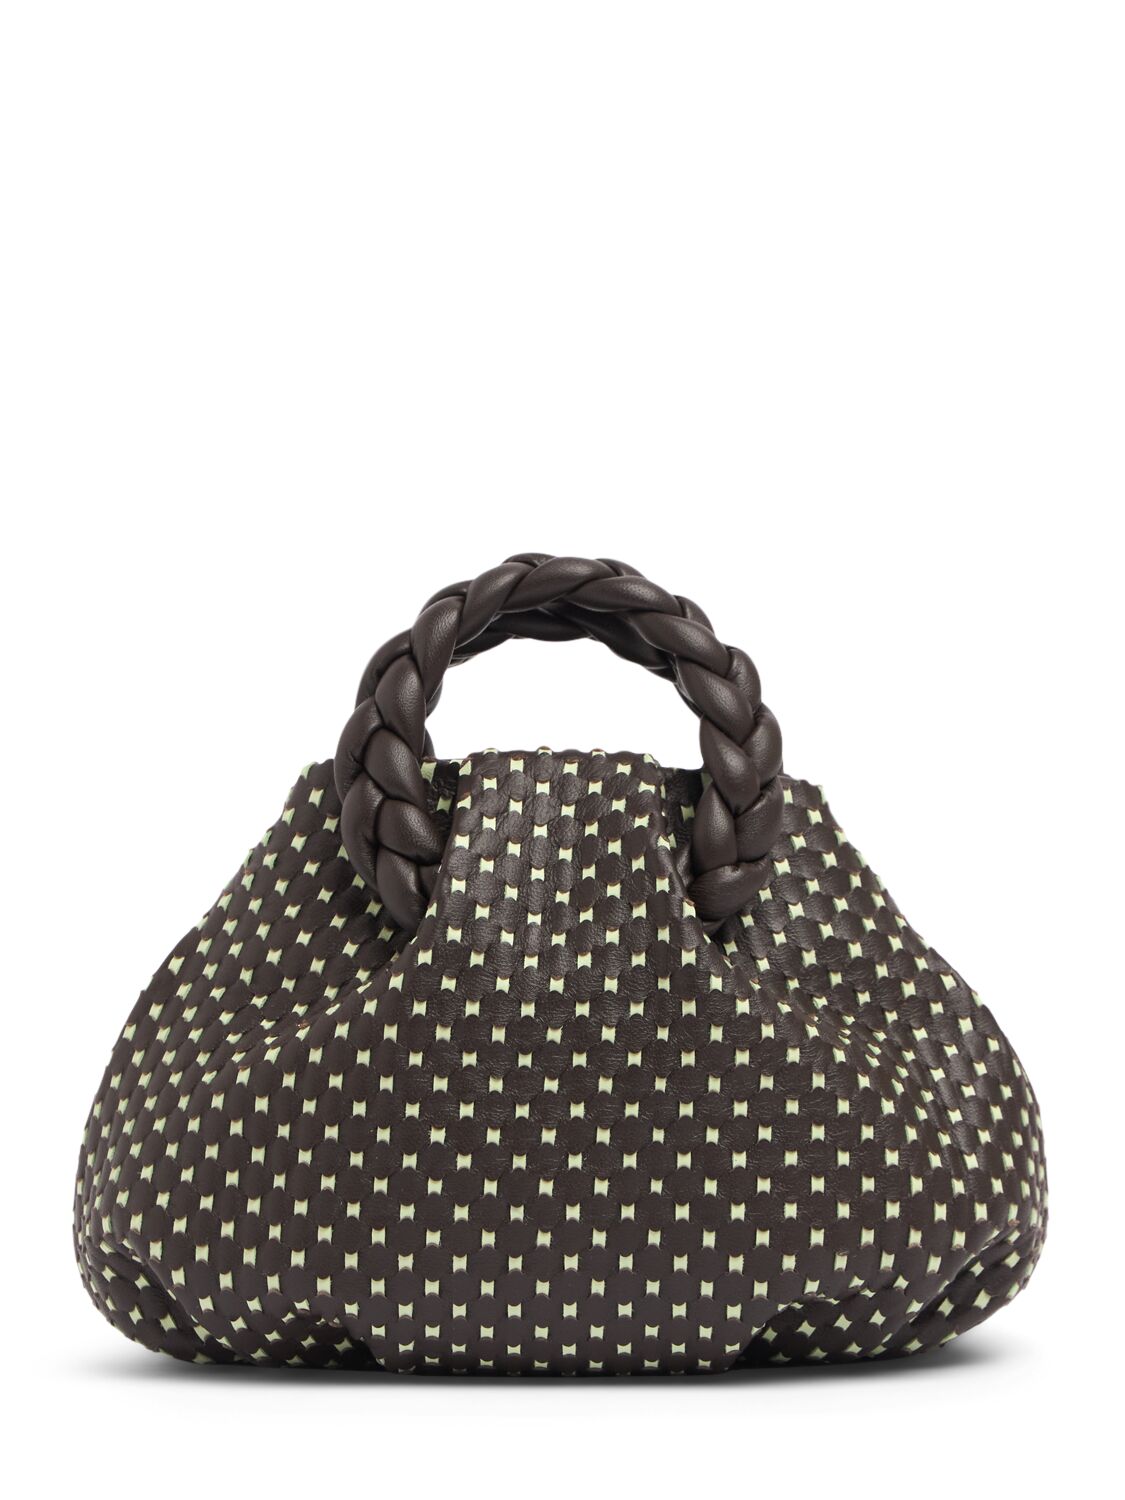 Image of Bombon Woven Leather Top Handle Bag